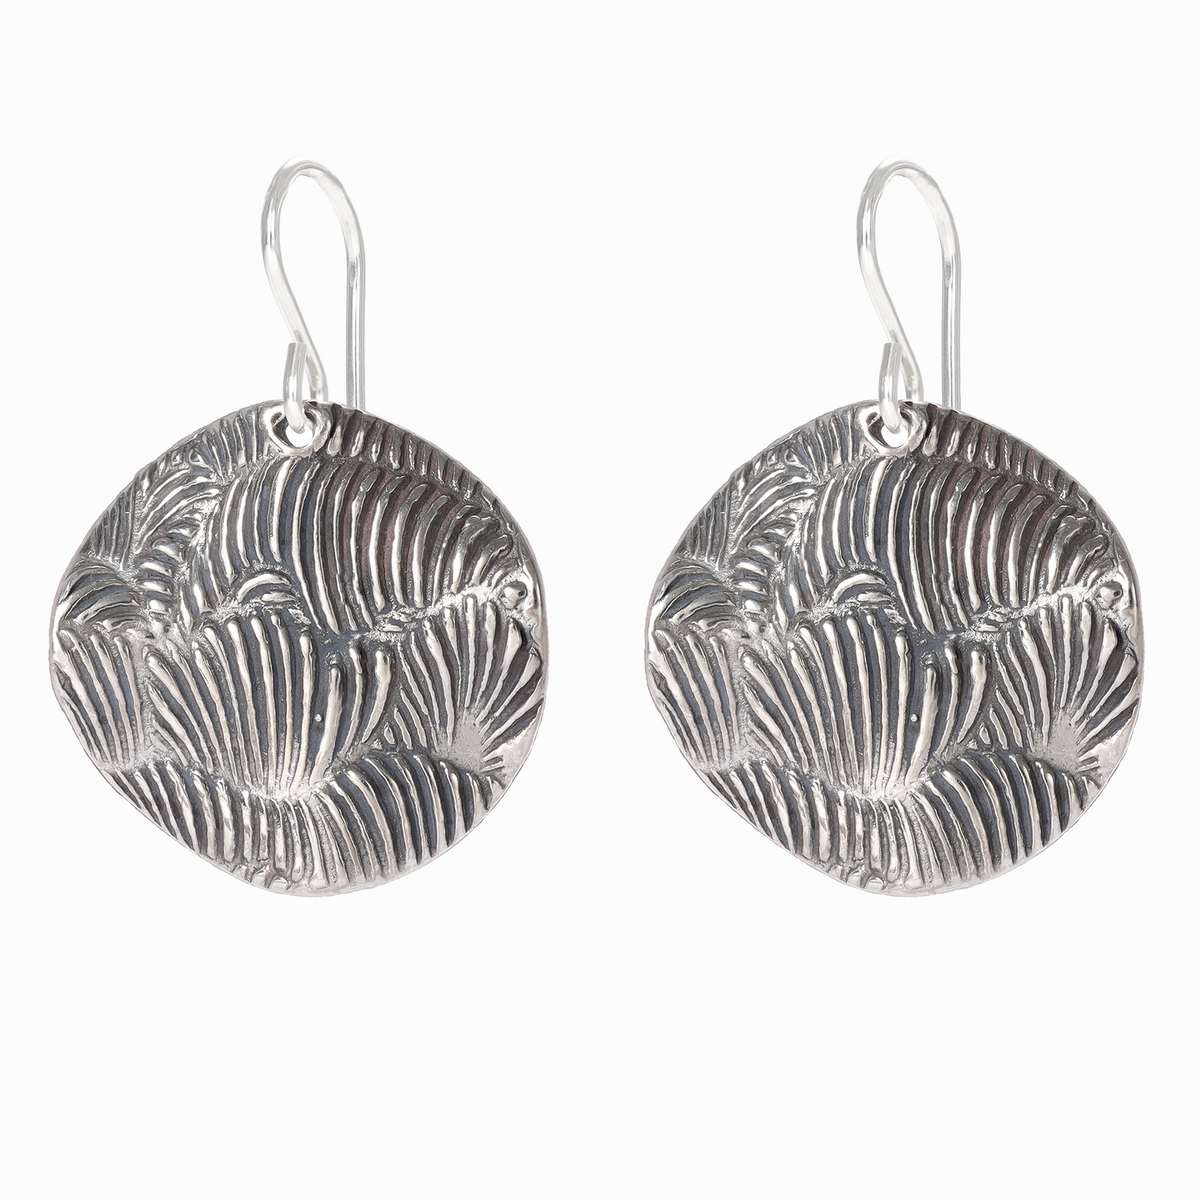 Mushroom Textured Large Sterling Silver Earrings on Short Ear Wires